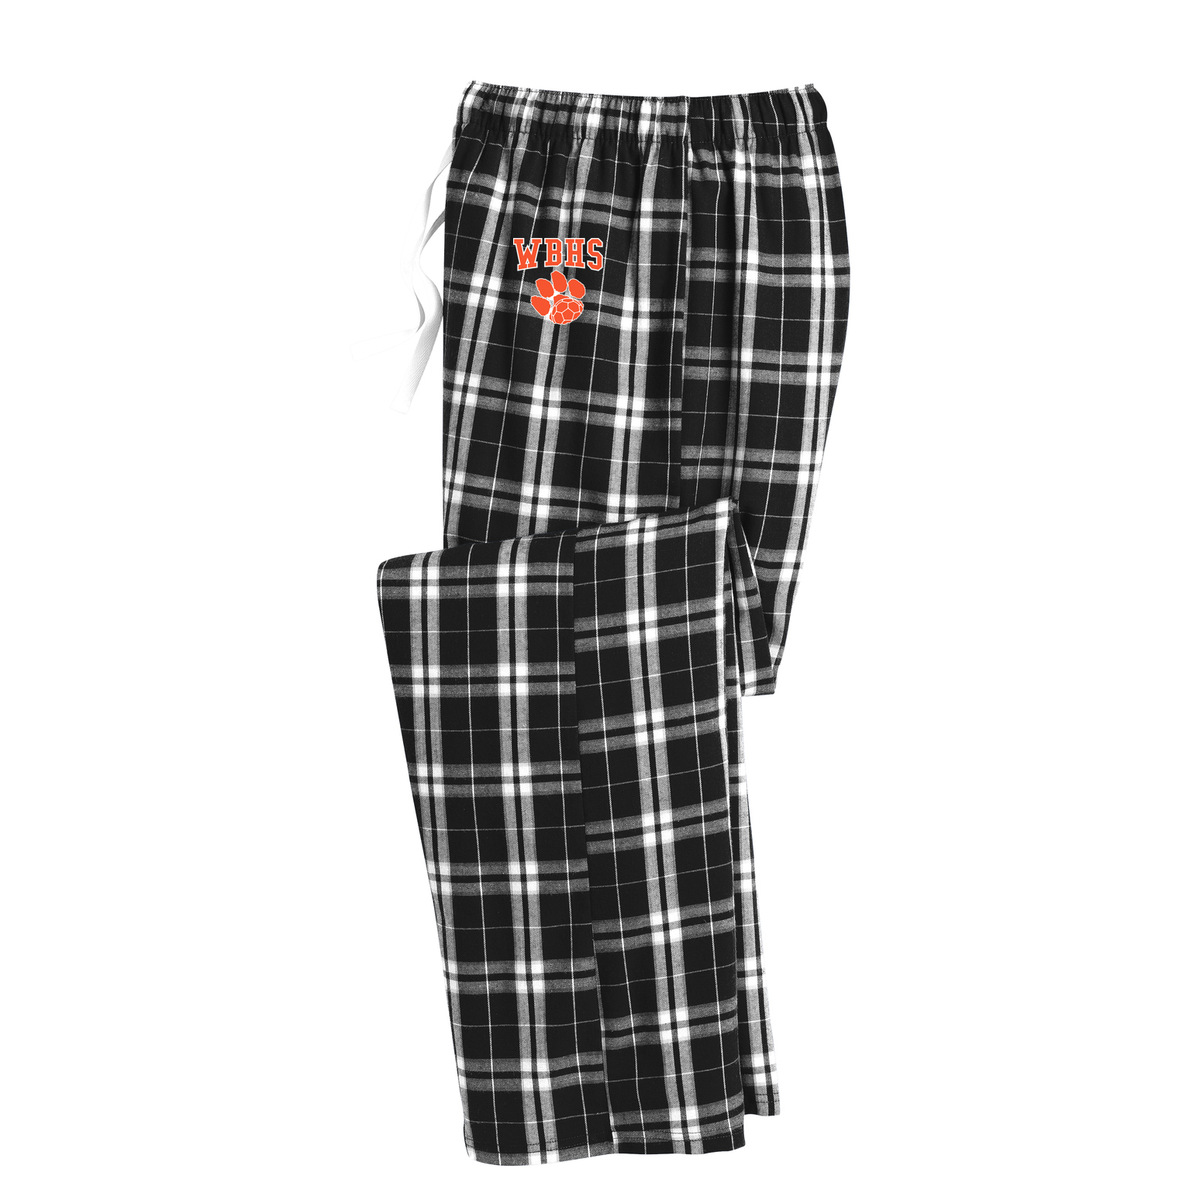 WBHS Boys Soccer Plaid Pajama Pants